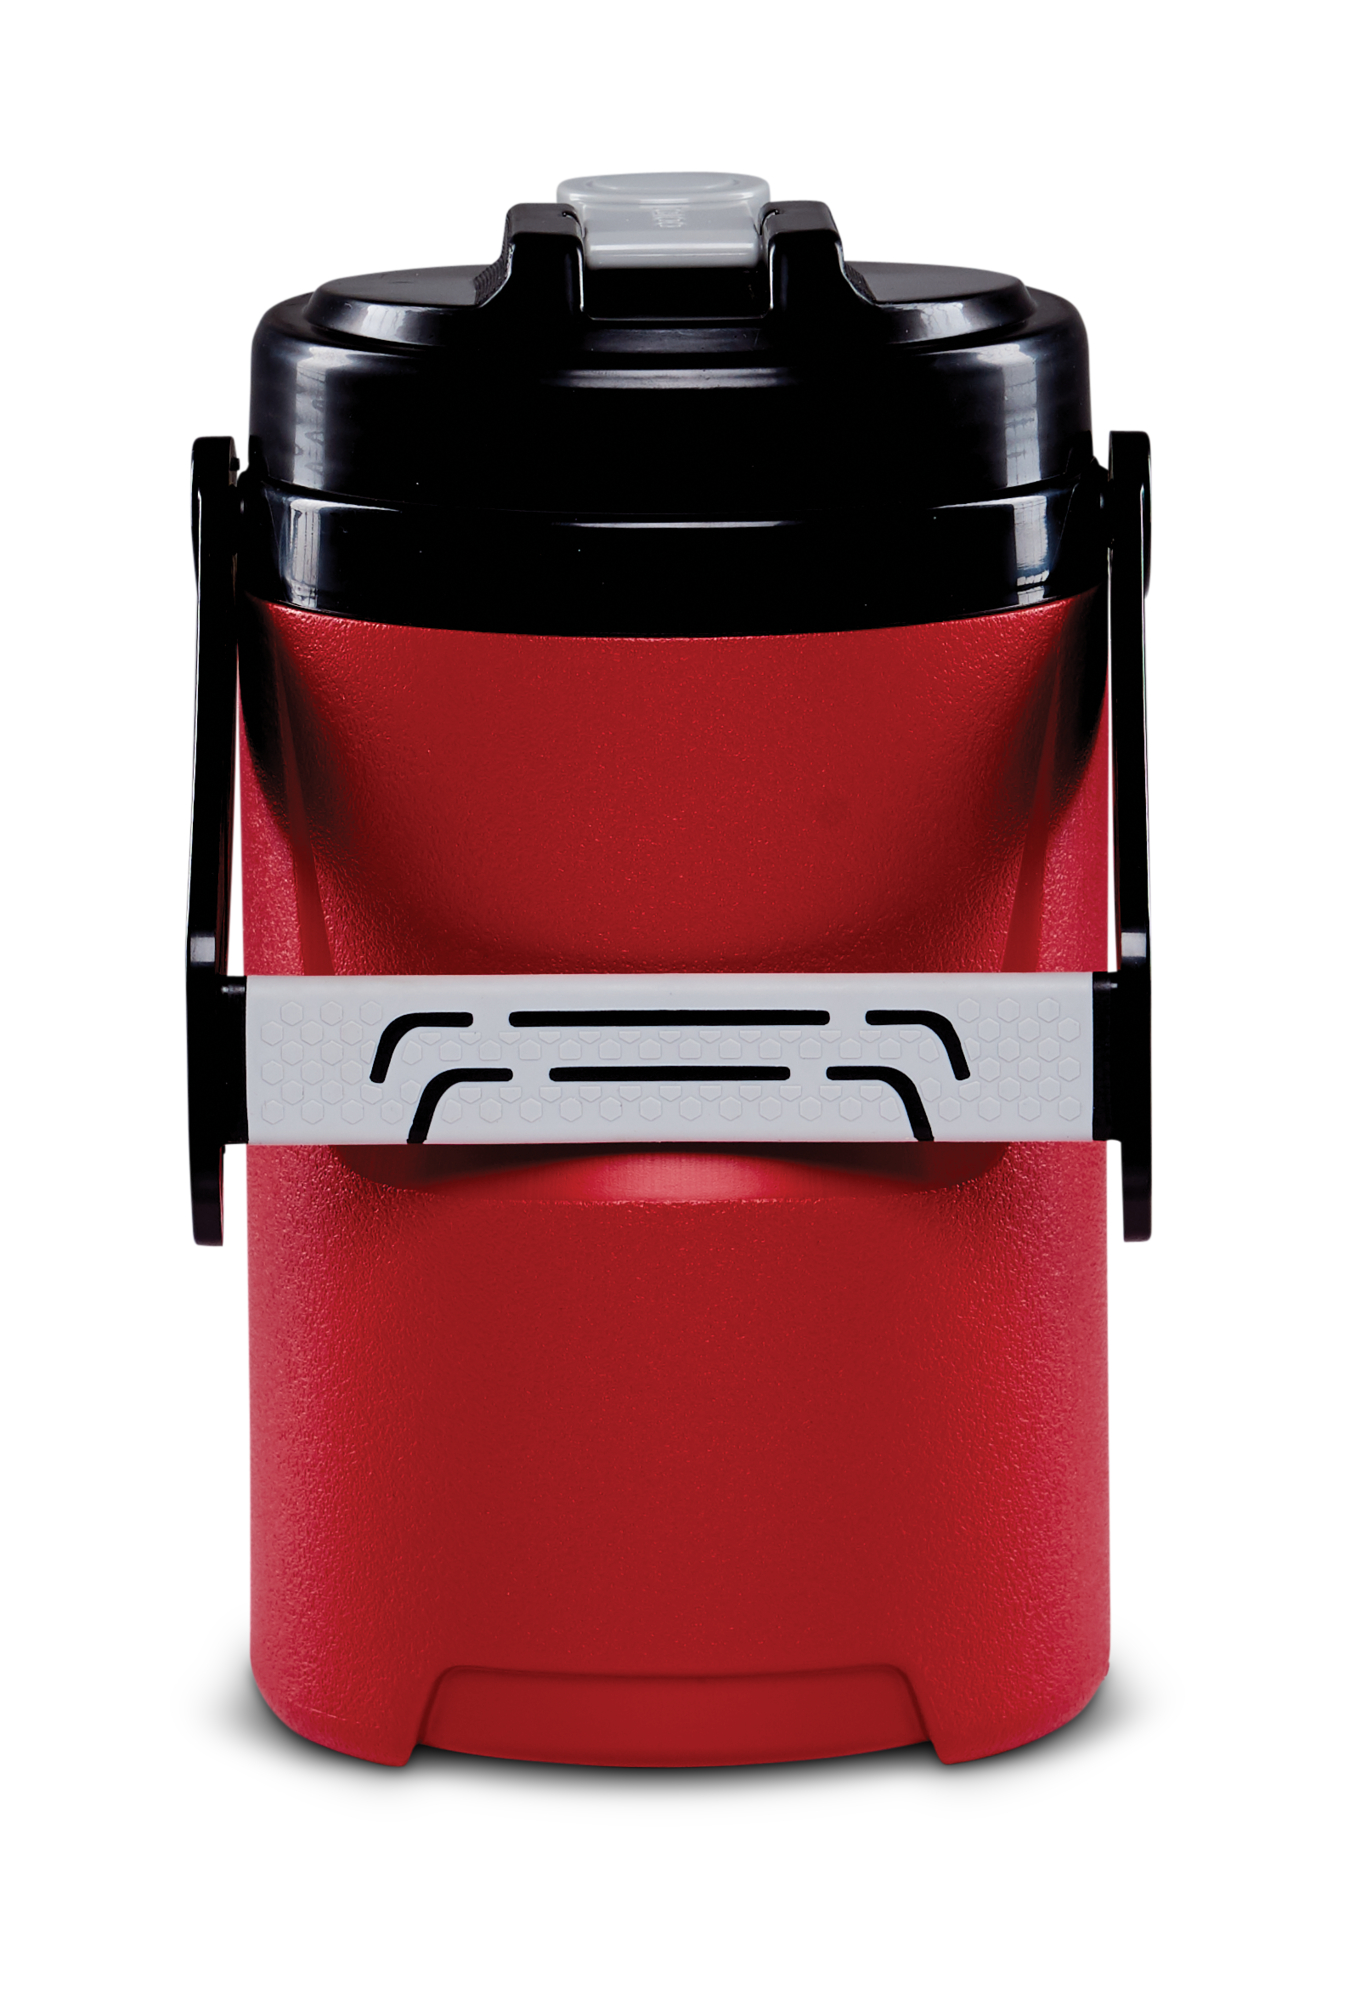 Igloo 1/2-Gallon Laguna Pro Beverage Cooler - Red - image 2 of 6